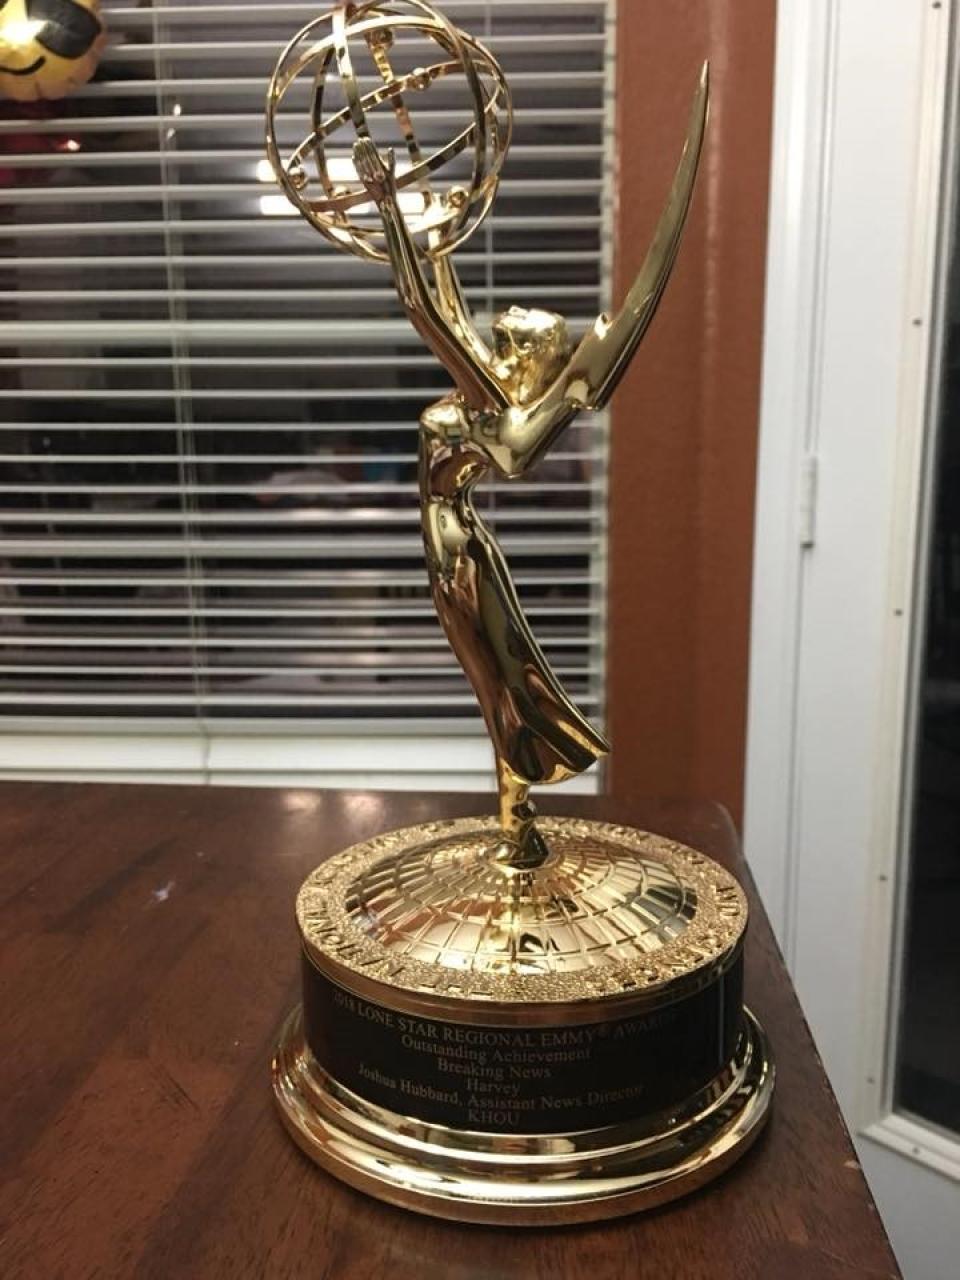 Emmy award won by Josh Hubbard